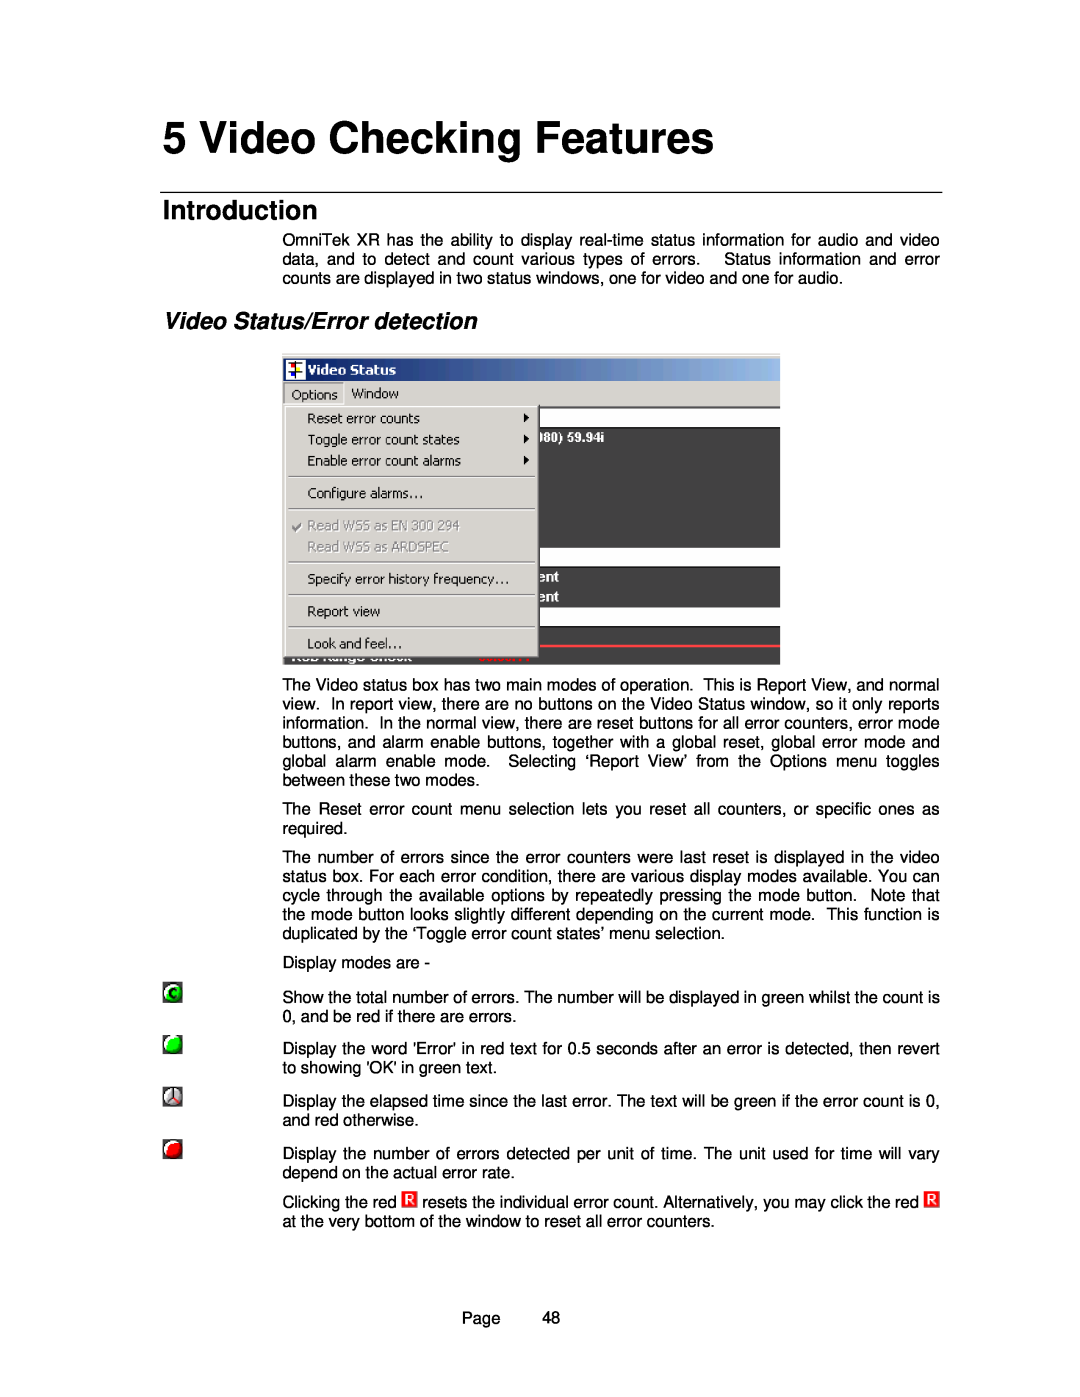 OmniTek OmniTek XR manual Video Checking Features, Video Status/Error detection, Introduction 